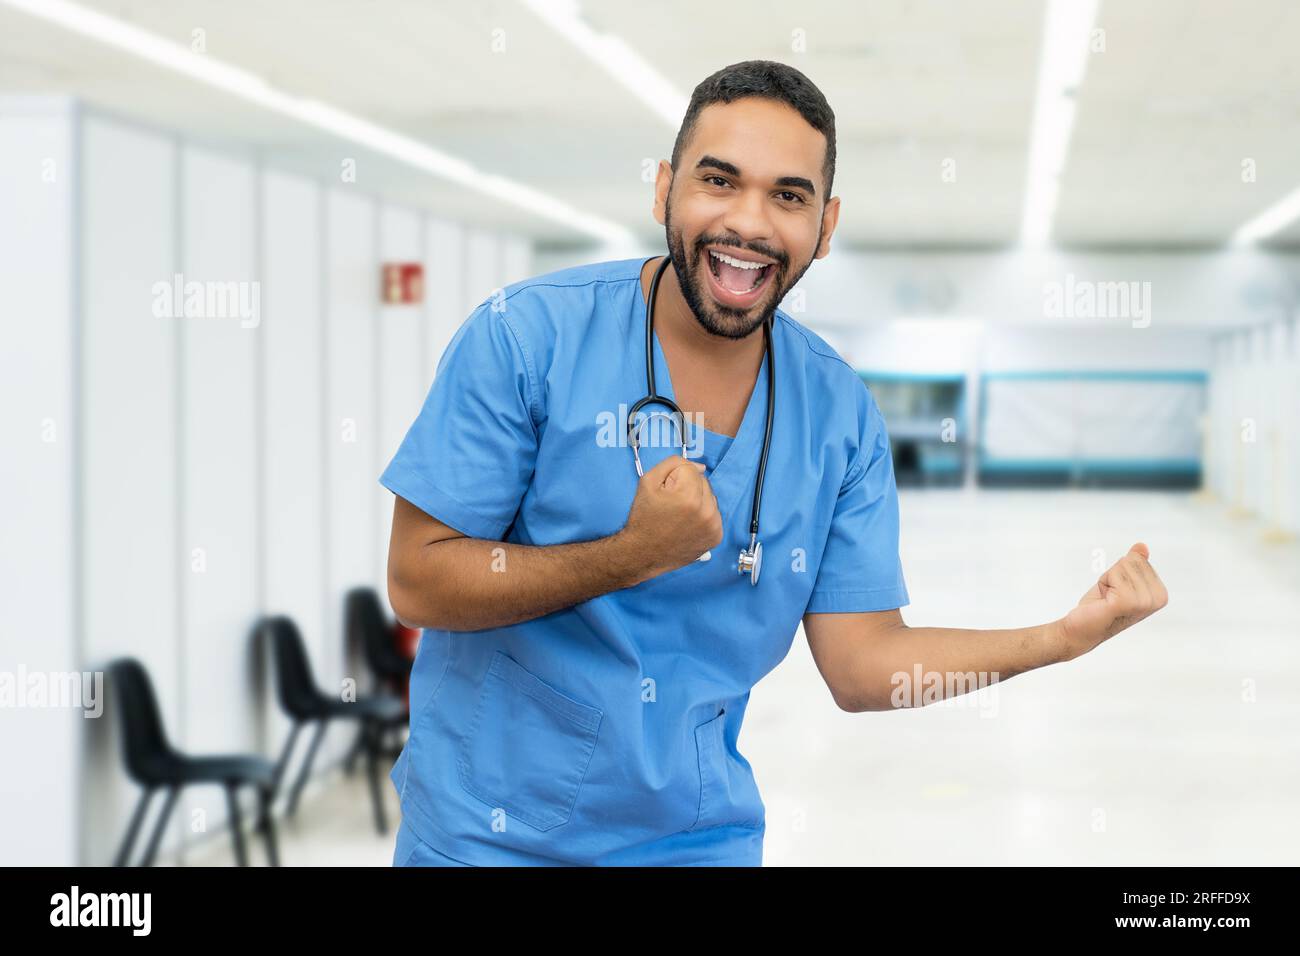 Cheering hispanic male nurse or doctor at hospital Stock Photo